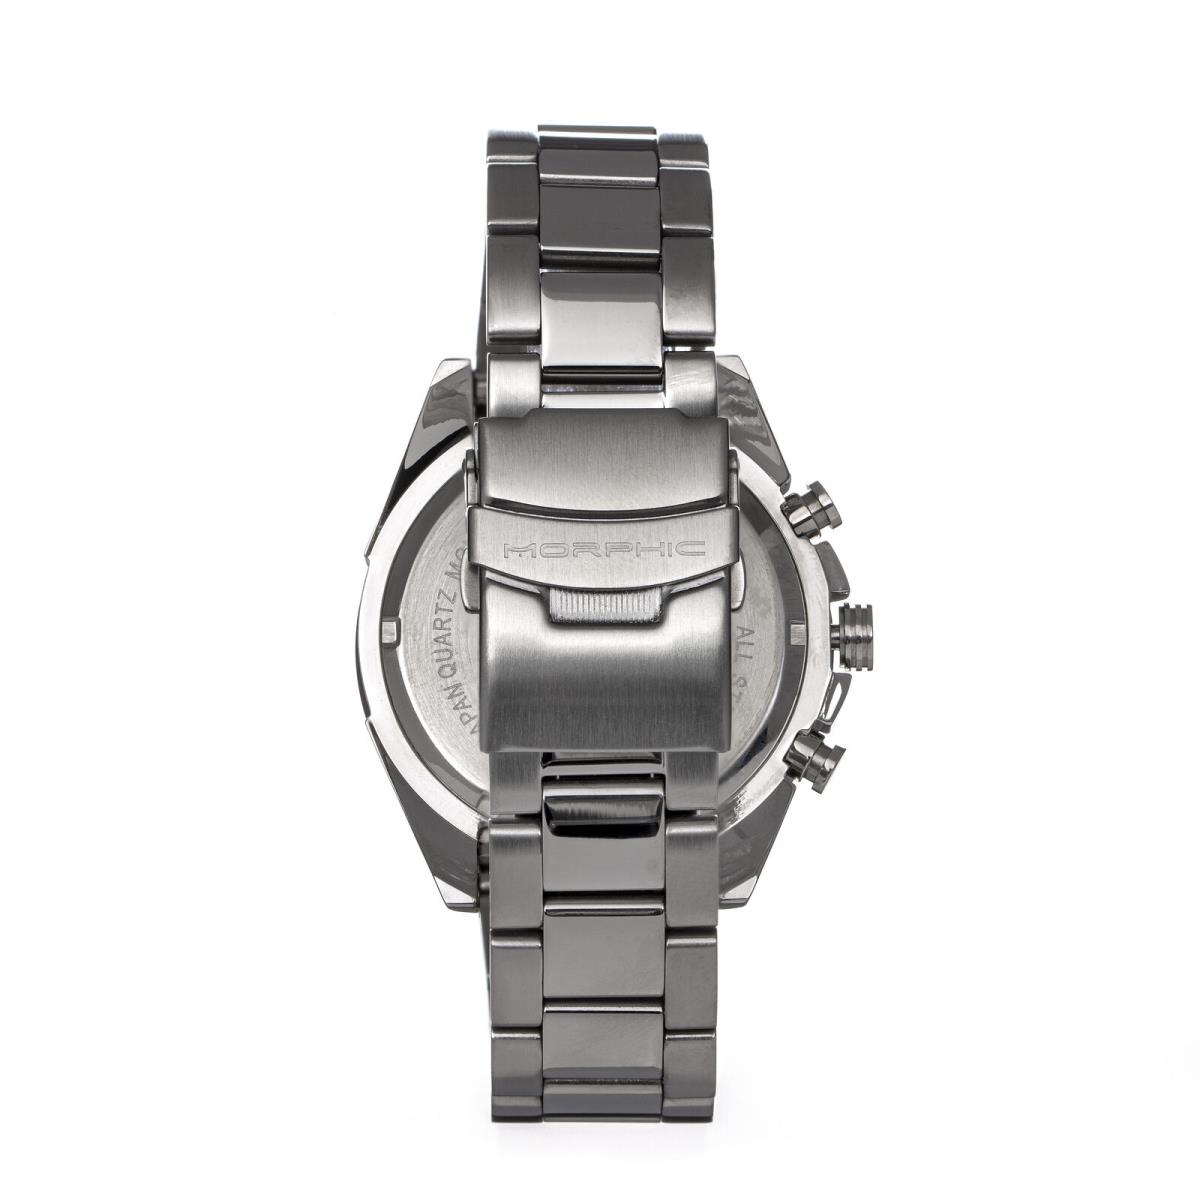 Morphic M94 Series Chronograph Bracelet Watch W/date - Grey